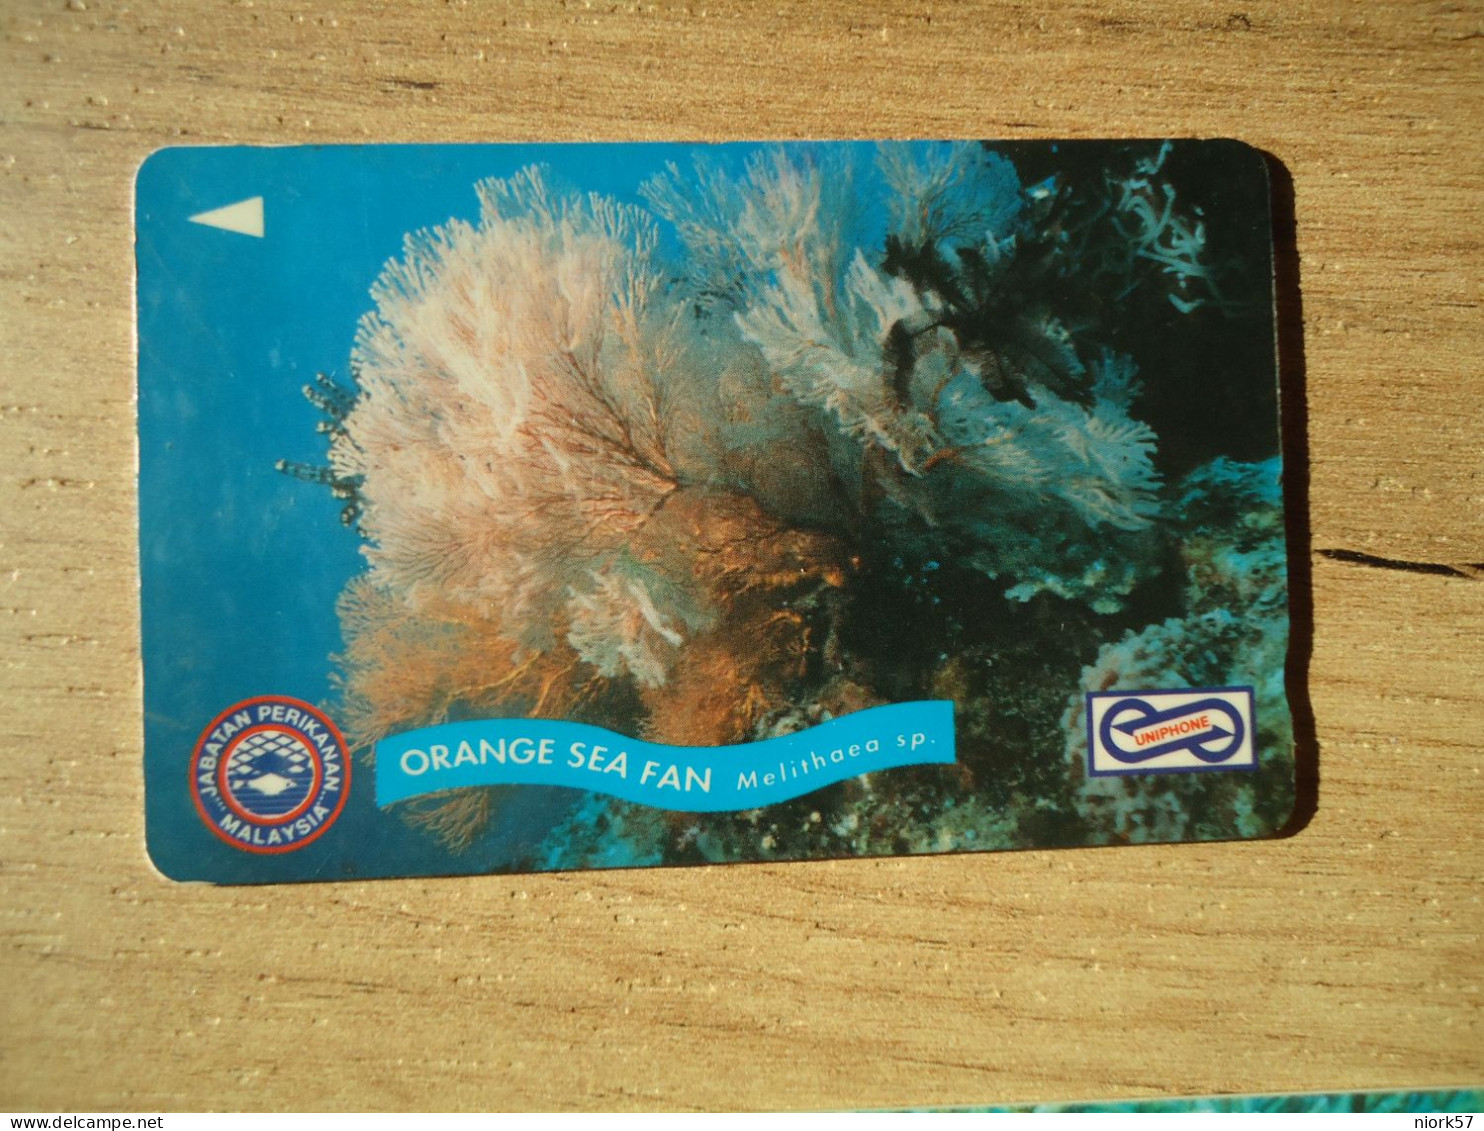 MALAYSIA USED CARDS FISHES MARINE LIFE - Vissen